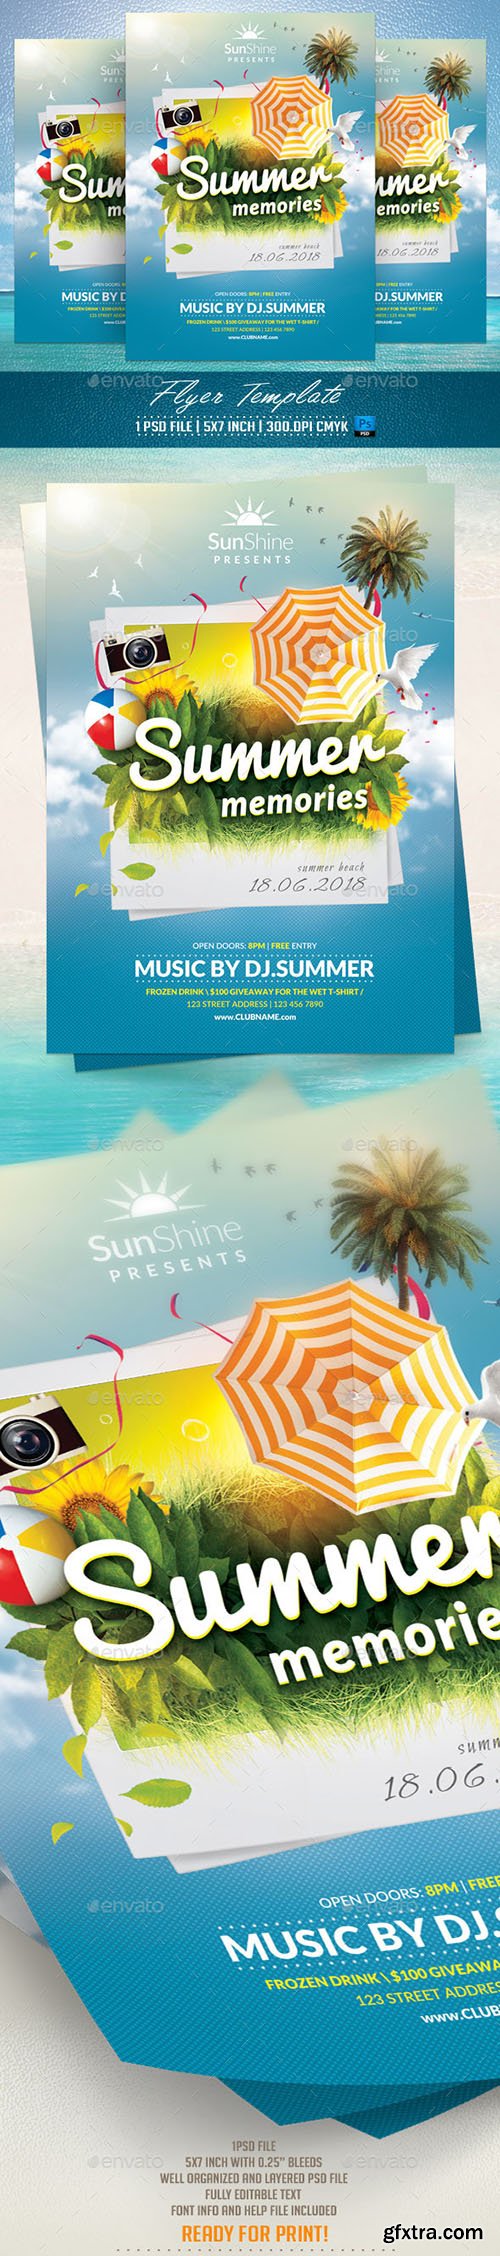 Graphicriver Summer Memories Flyer Template 11830756